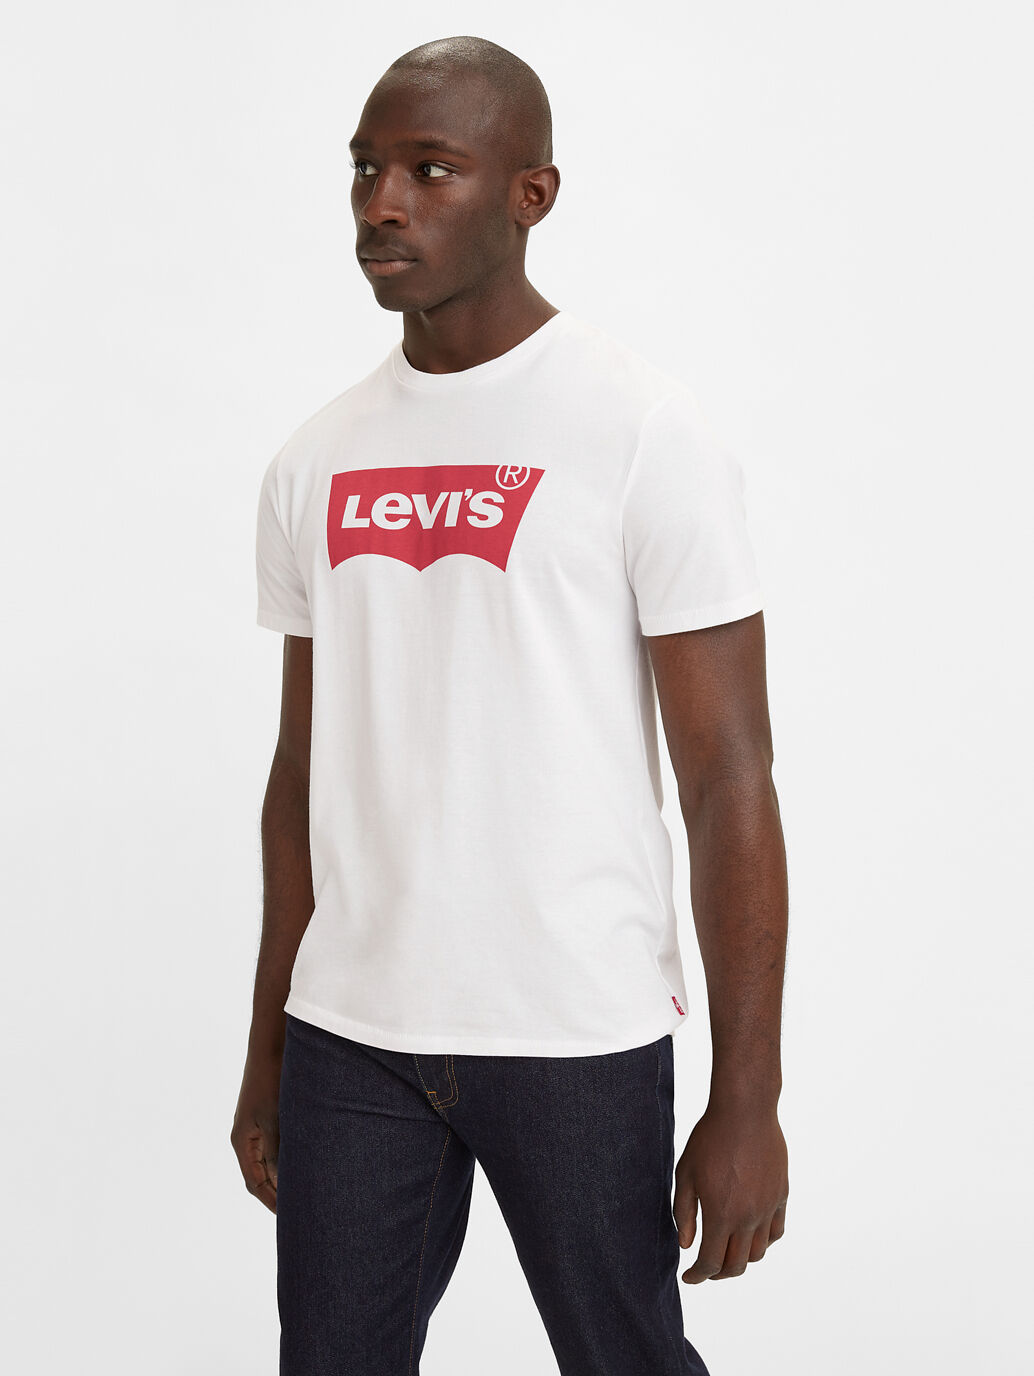 levis duplicate t shirt